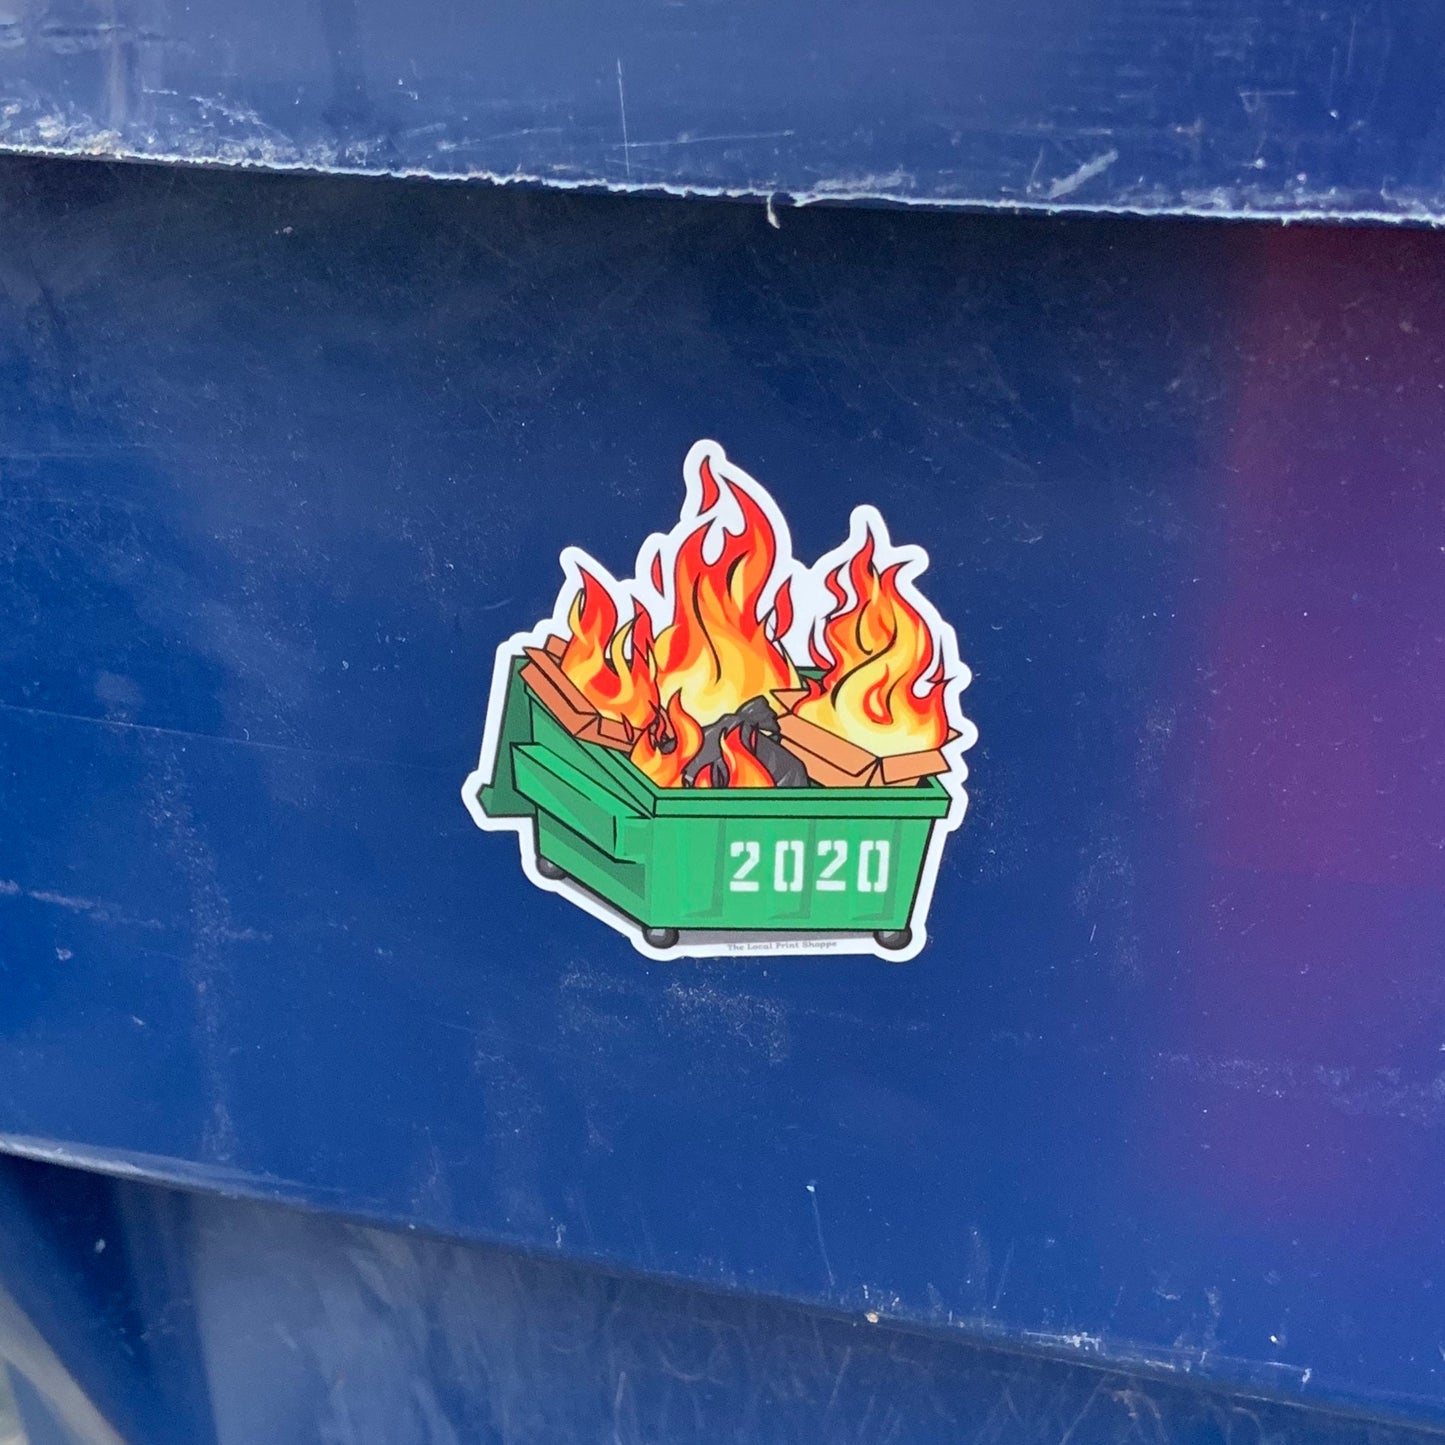 "Dumpster Fire 2020" Waterproof Sticker Decal